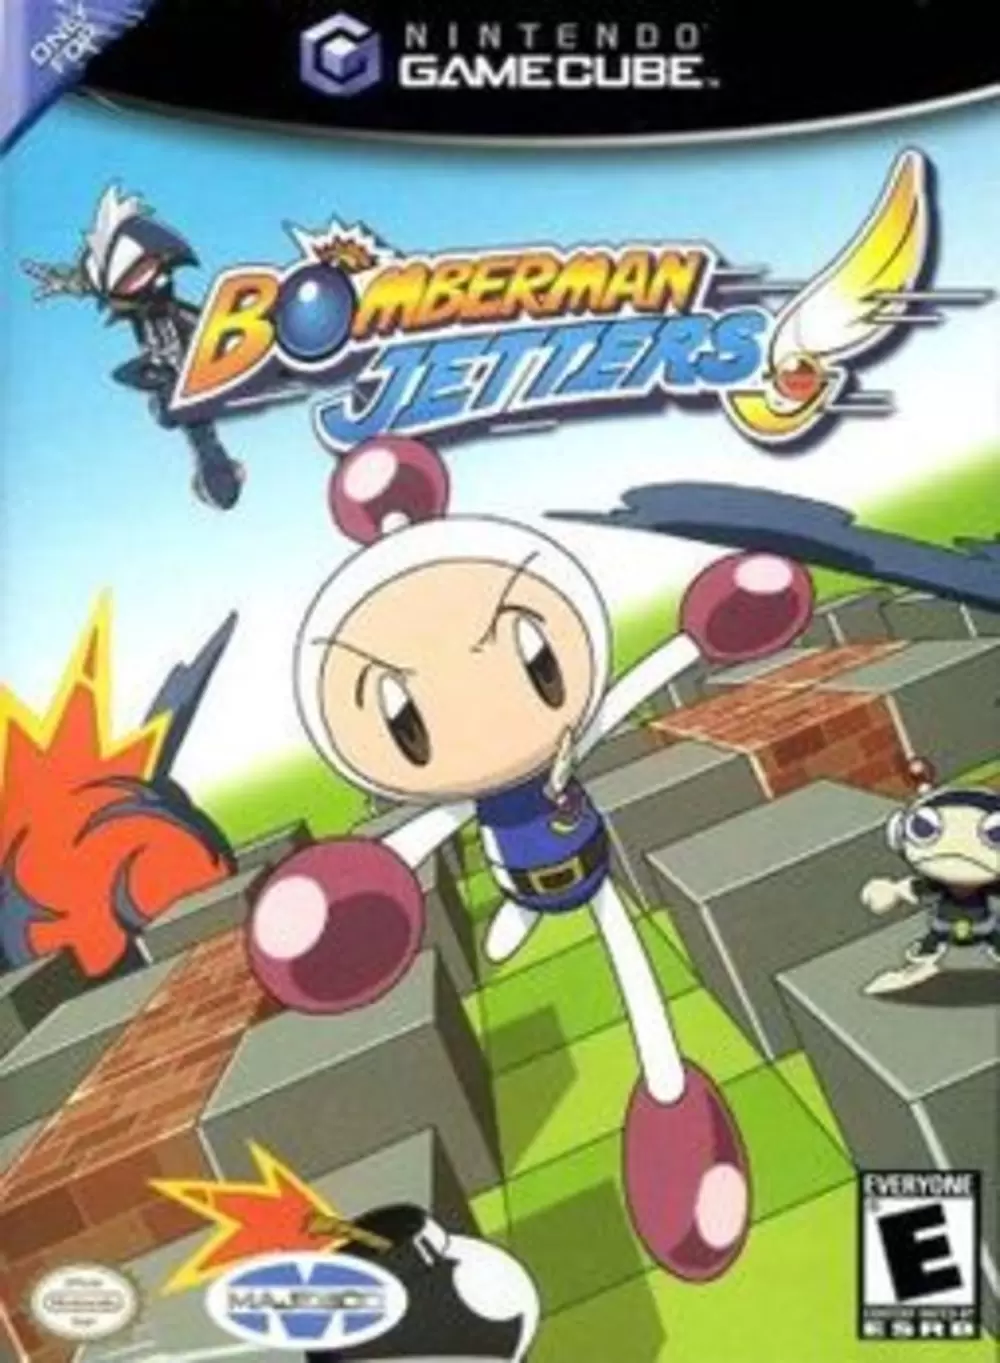 Nintendo Gamecube Games - Bomberman Jetters